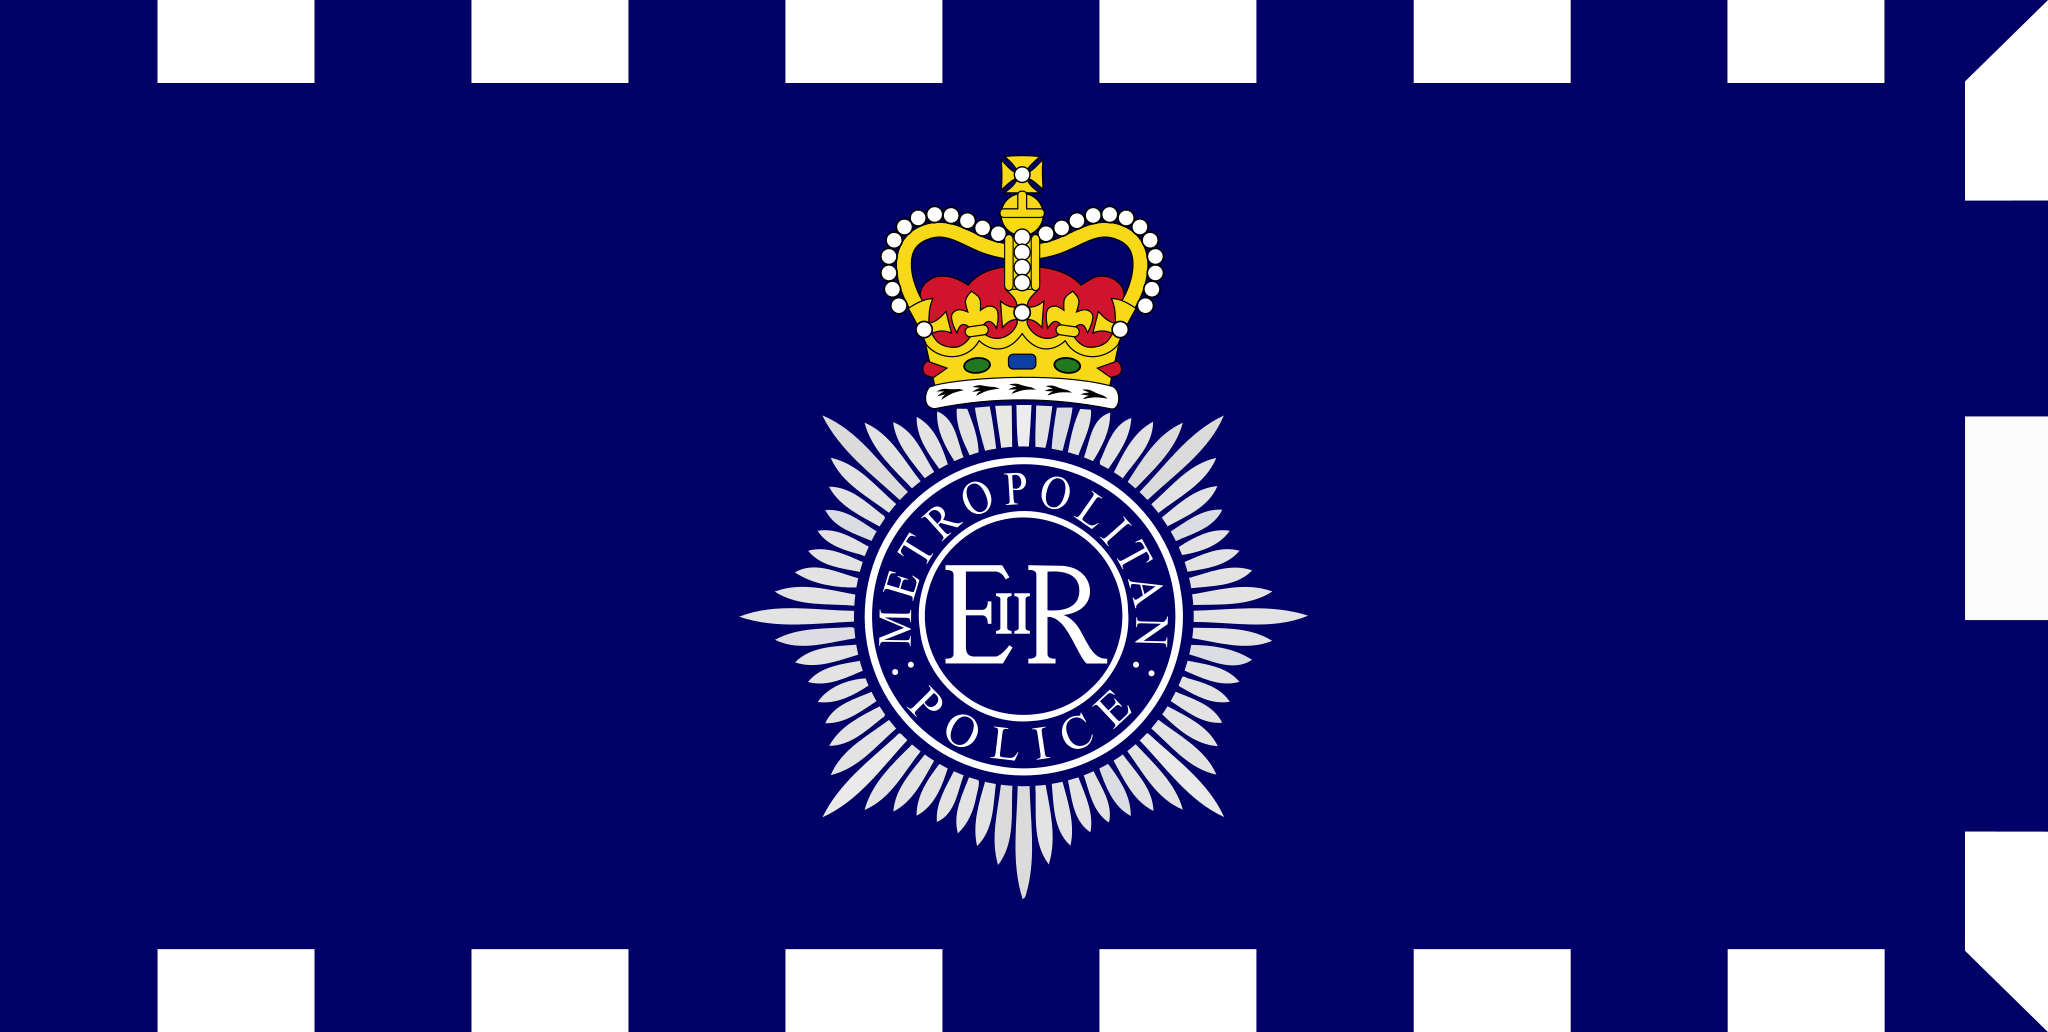 The Metropolitan police badge